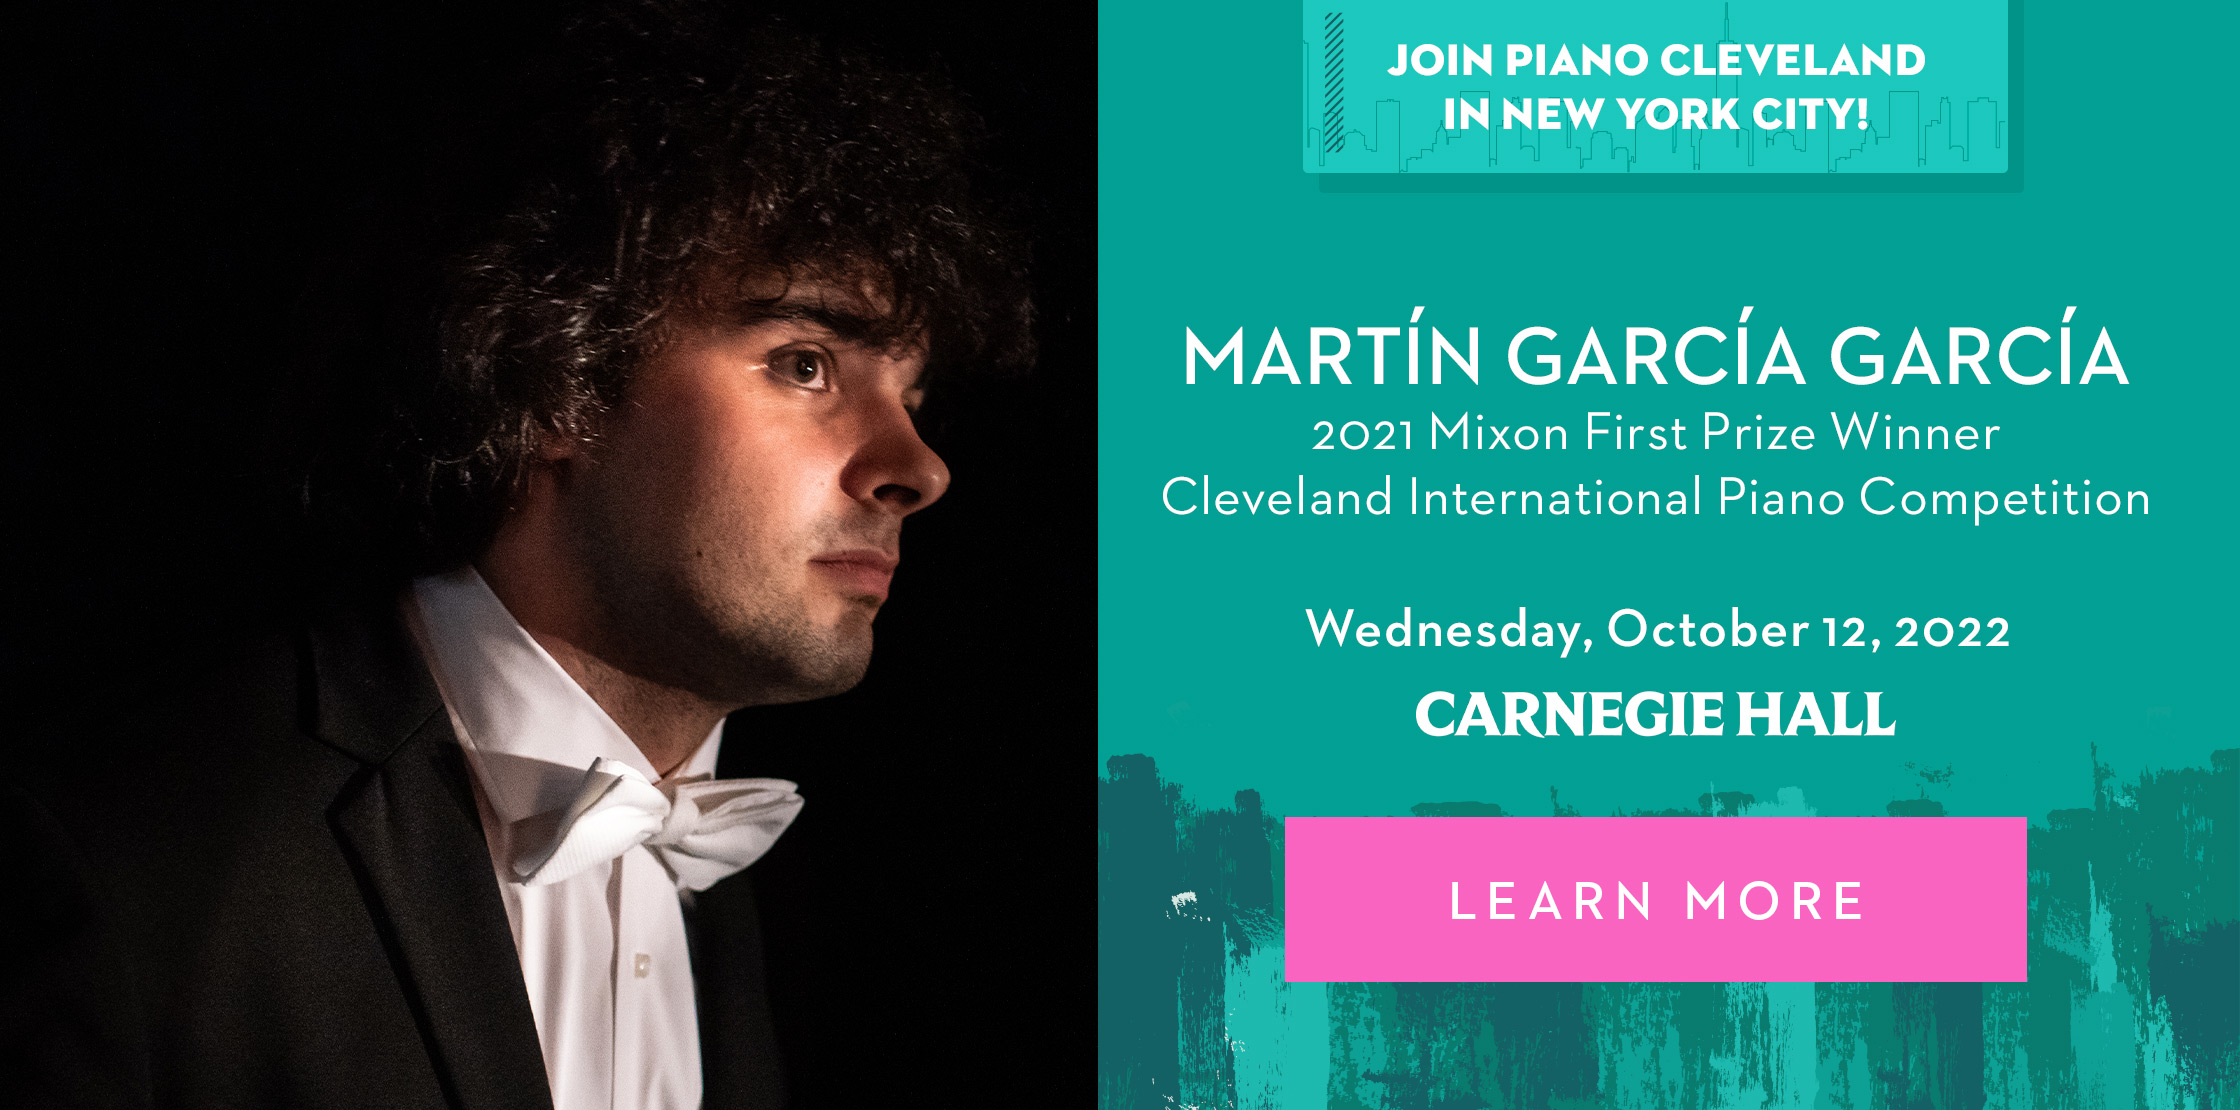 Martín García García Carnegie Hall Debut. Wednesday, October 12, 2022